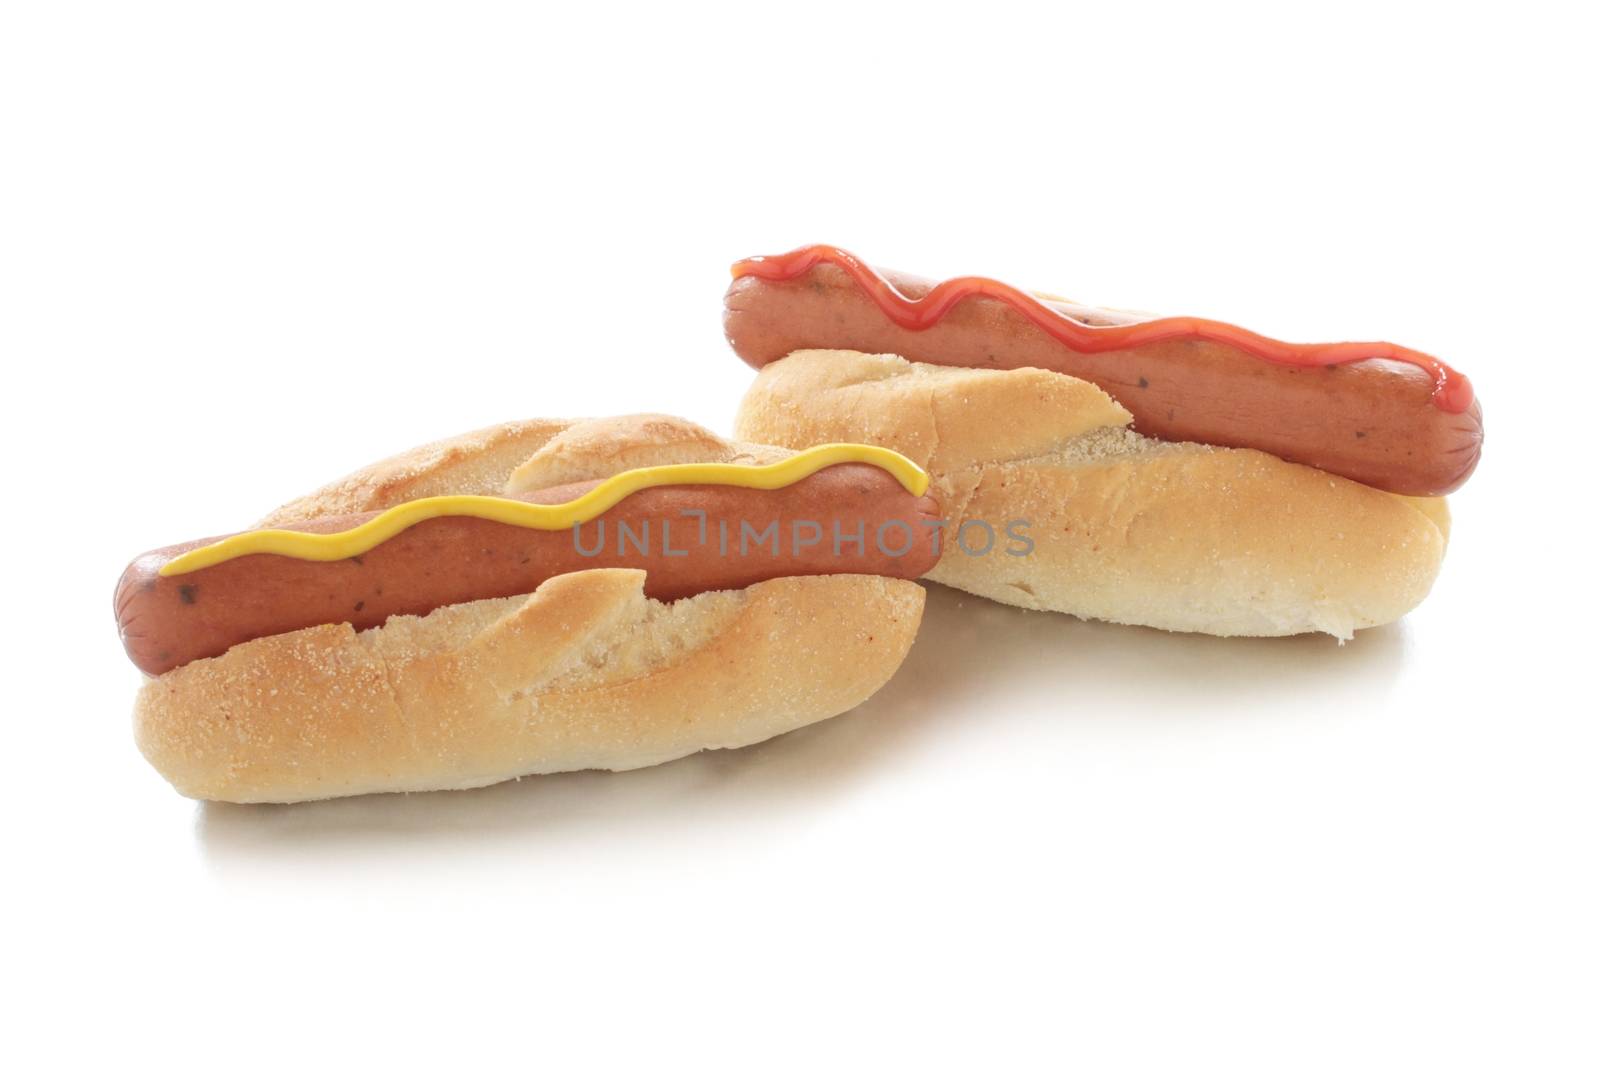 hot dog in bun by neil_langan